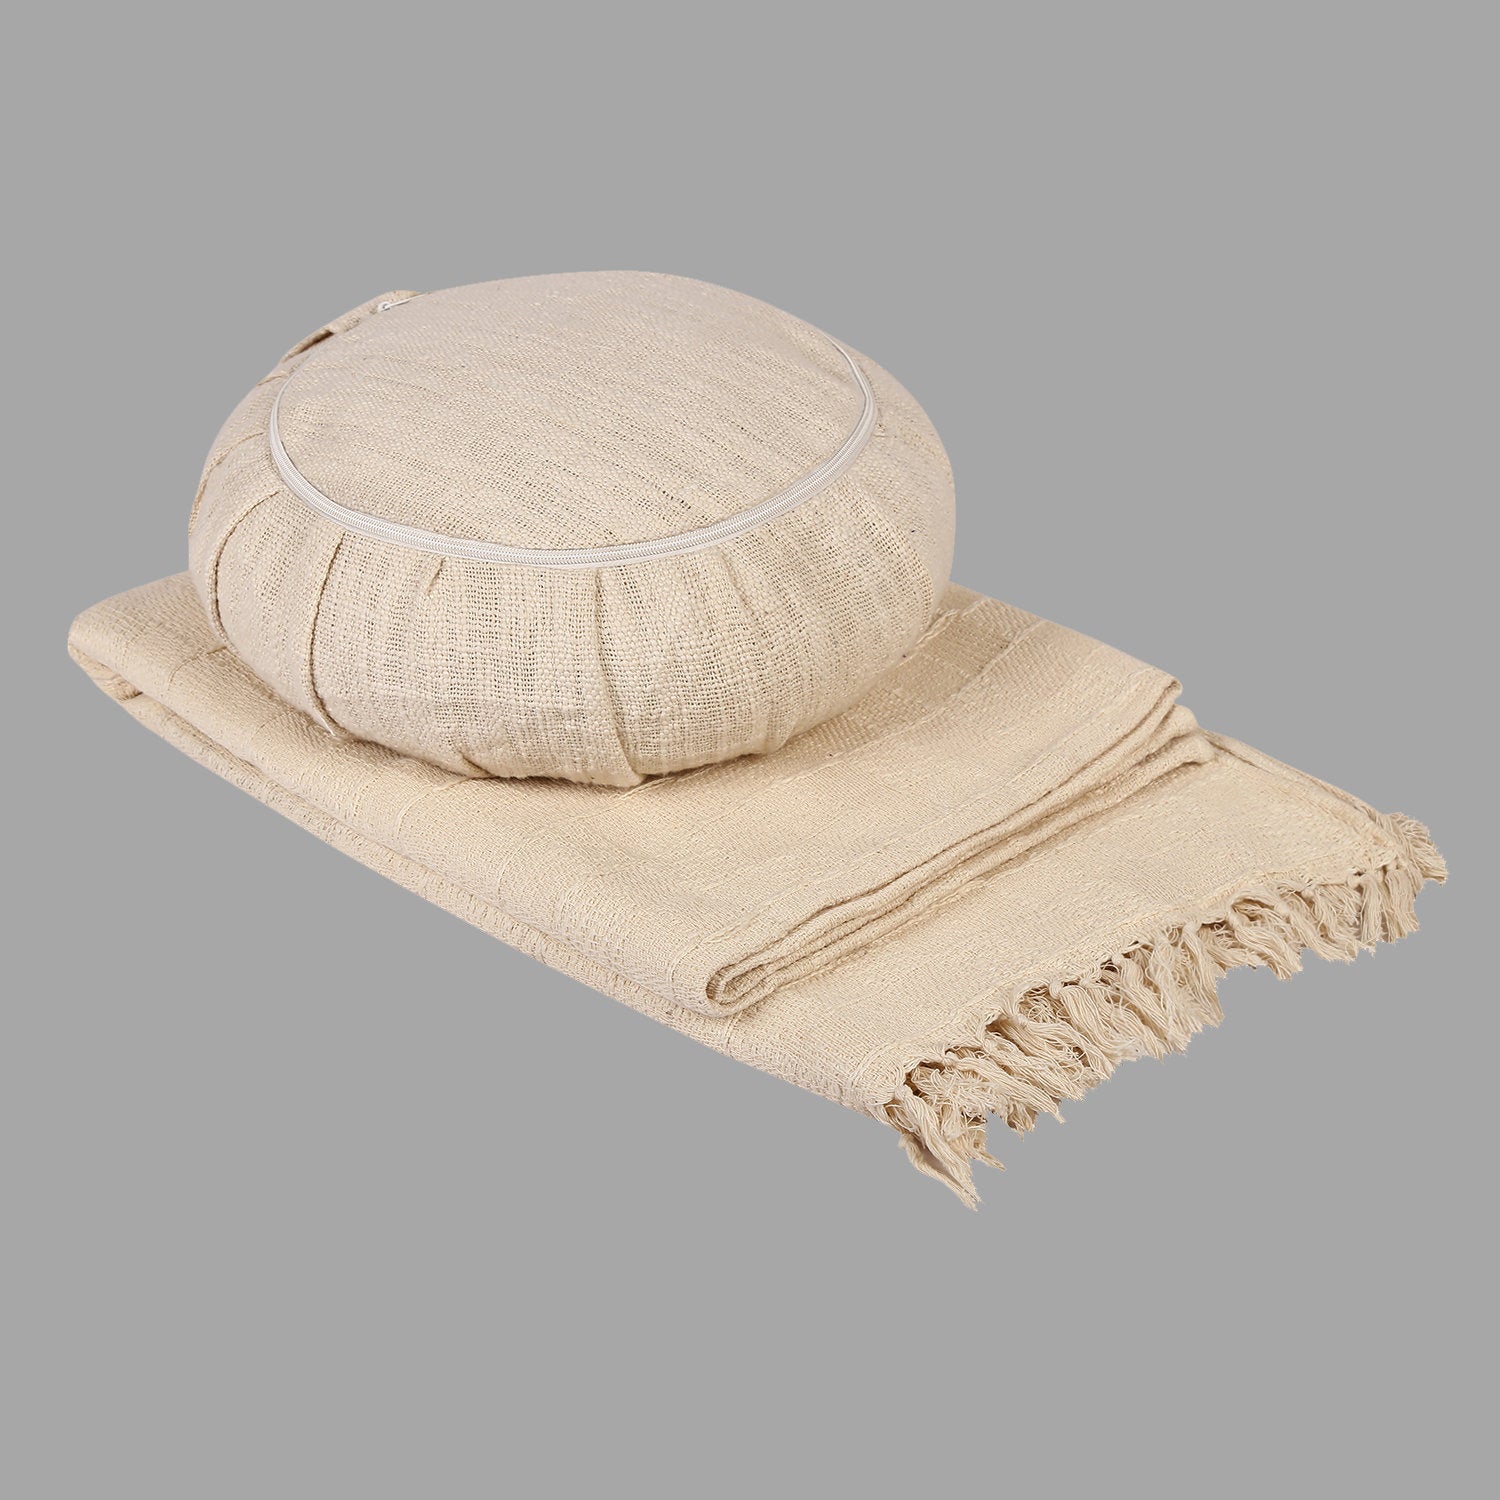 Combo Set - Handwoven Organic Cotton Blanket and a Meditation Cushion - Design: Bodhi - Christmas Gift